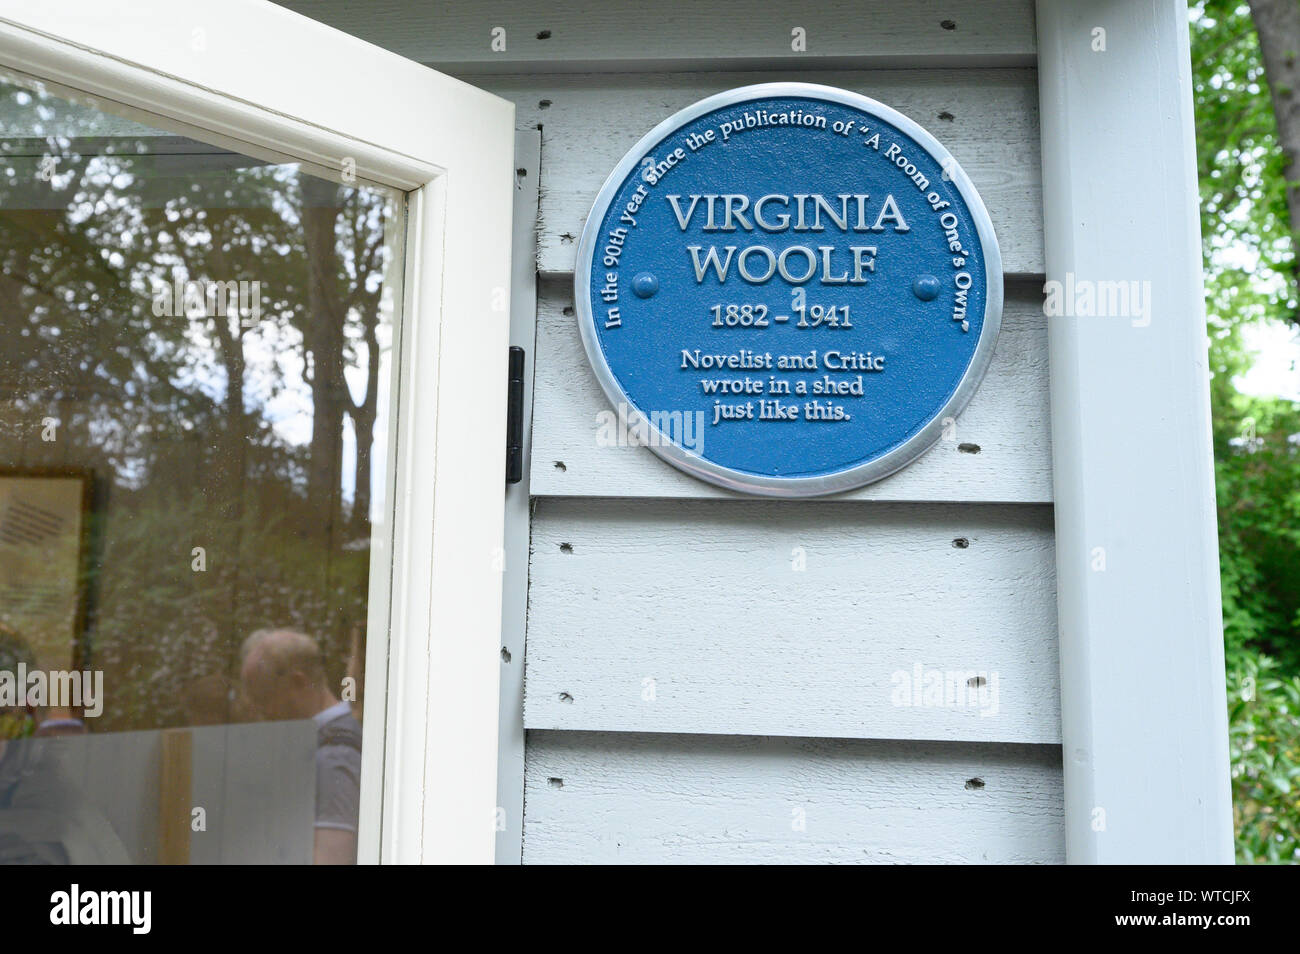 Virginia Woolf Shed Banque D'Images